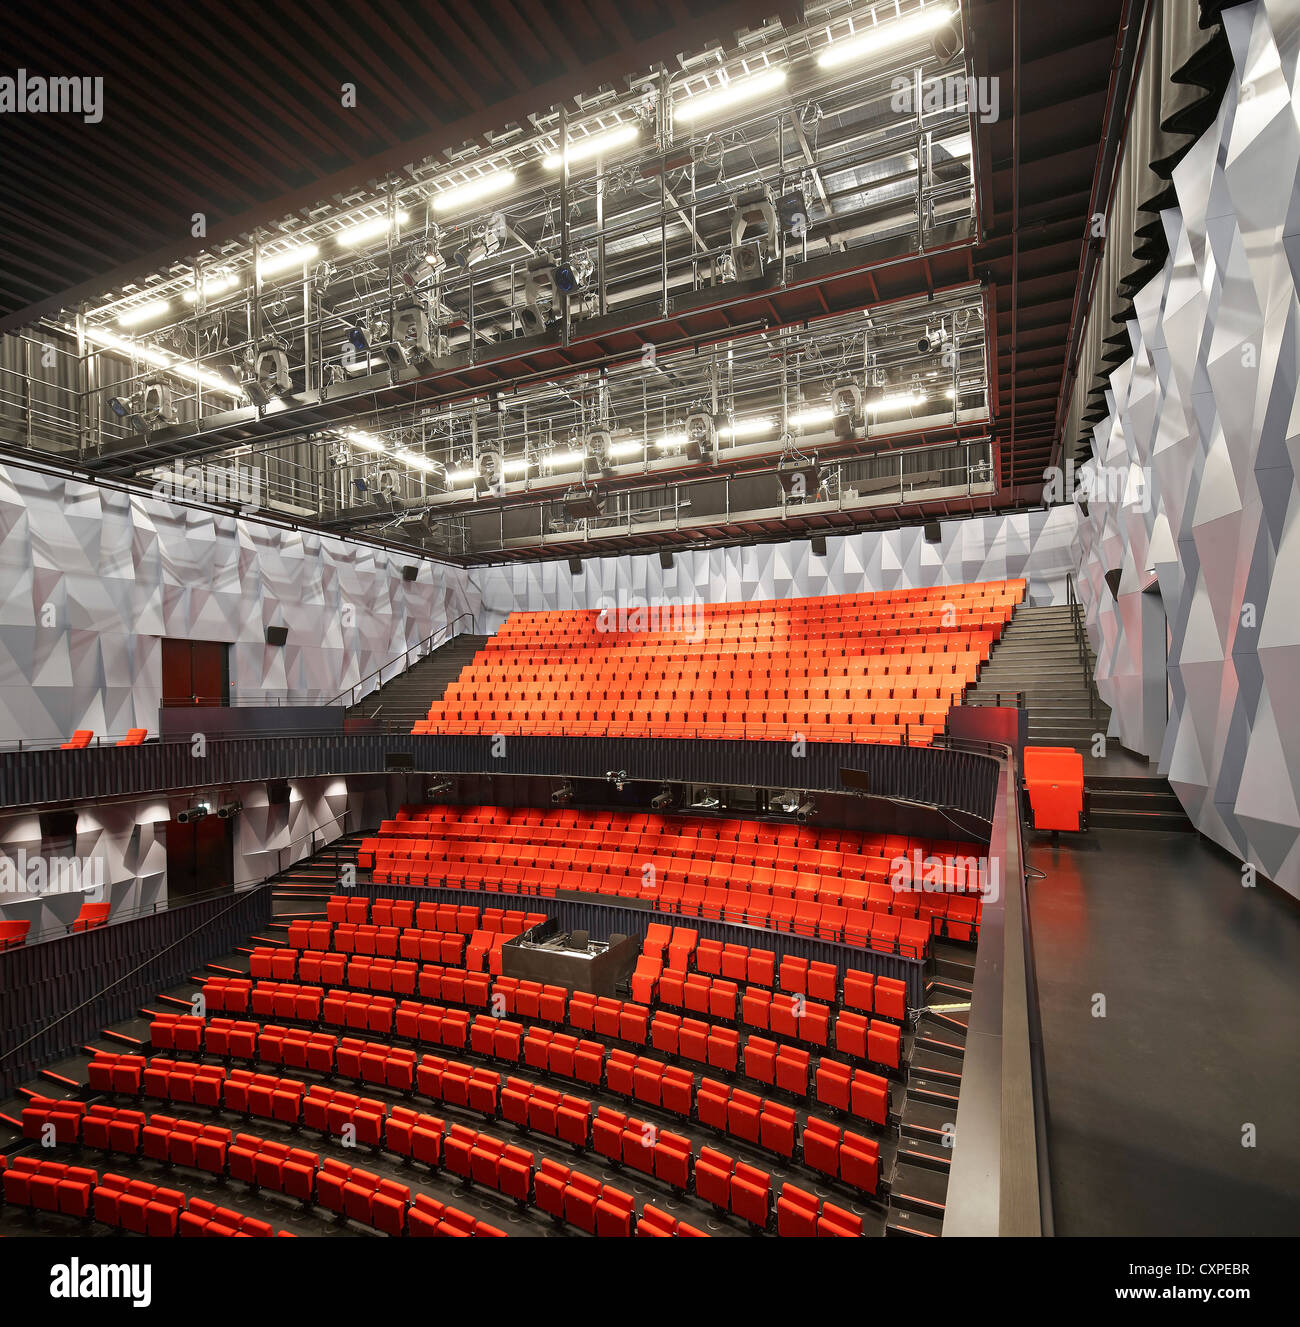 Kildee Performing Arts Centre, Kristiansand, Norvège. Architecte : ALA Architects, 2011. Banque D'Images